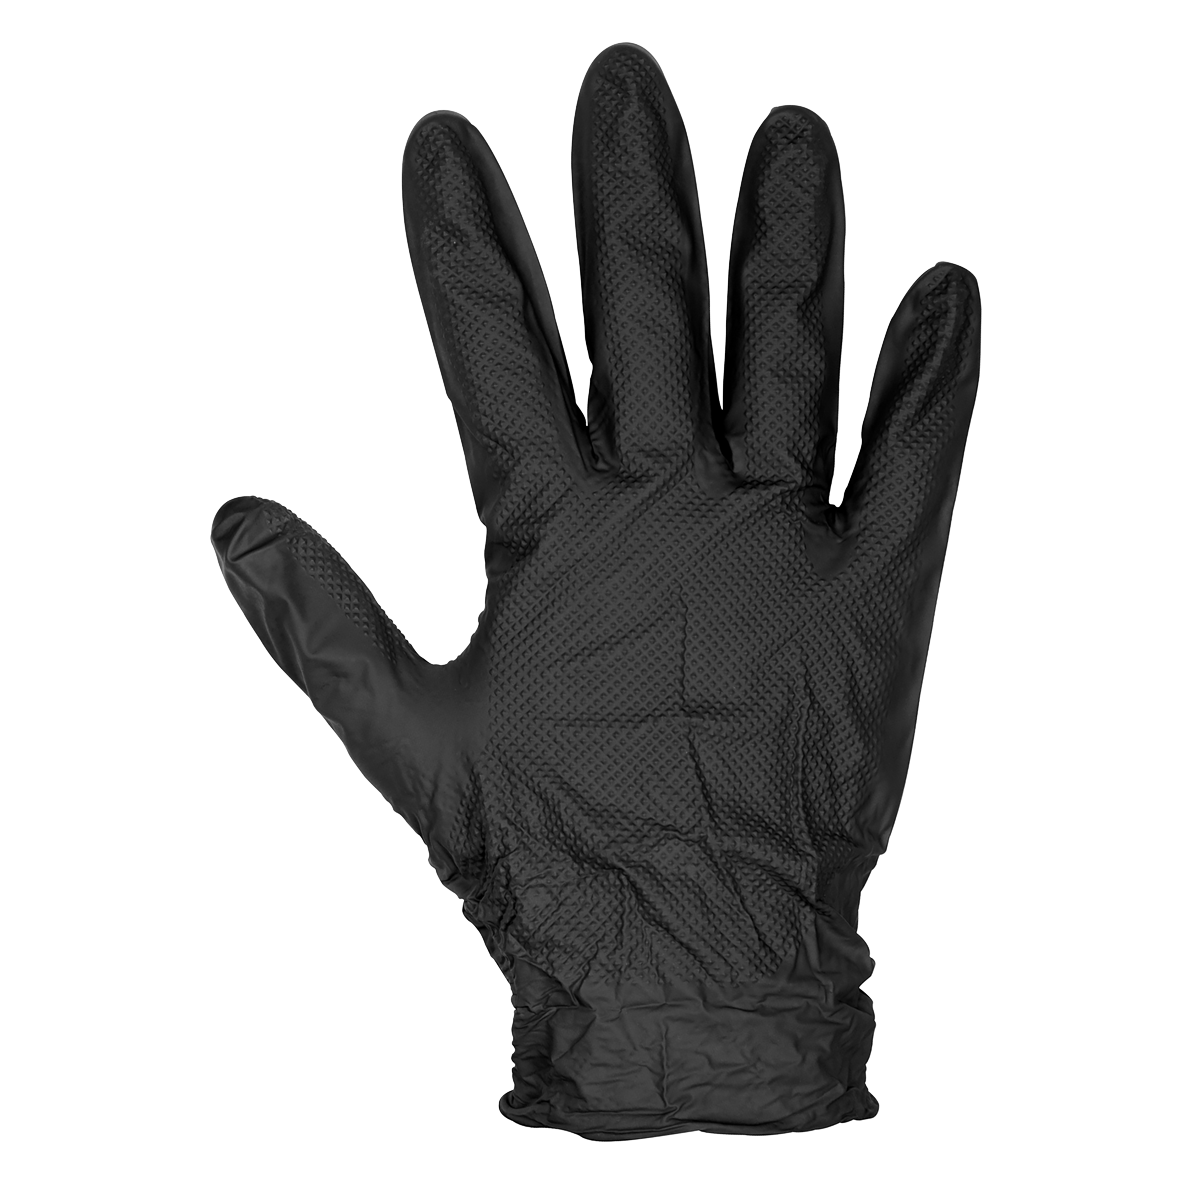 Black Diamond Grip Extra-Thick Nitrile Powder-Free Gloves - Pack of 50